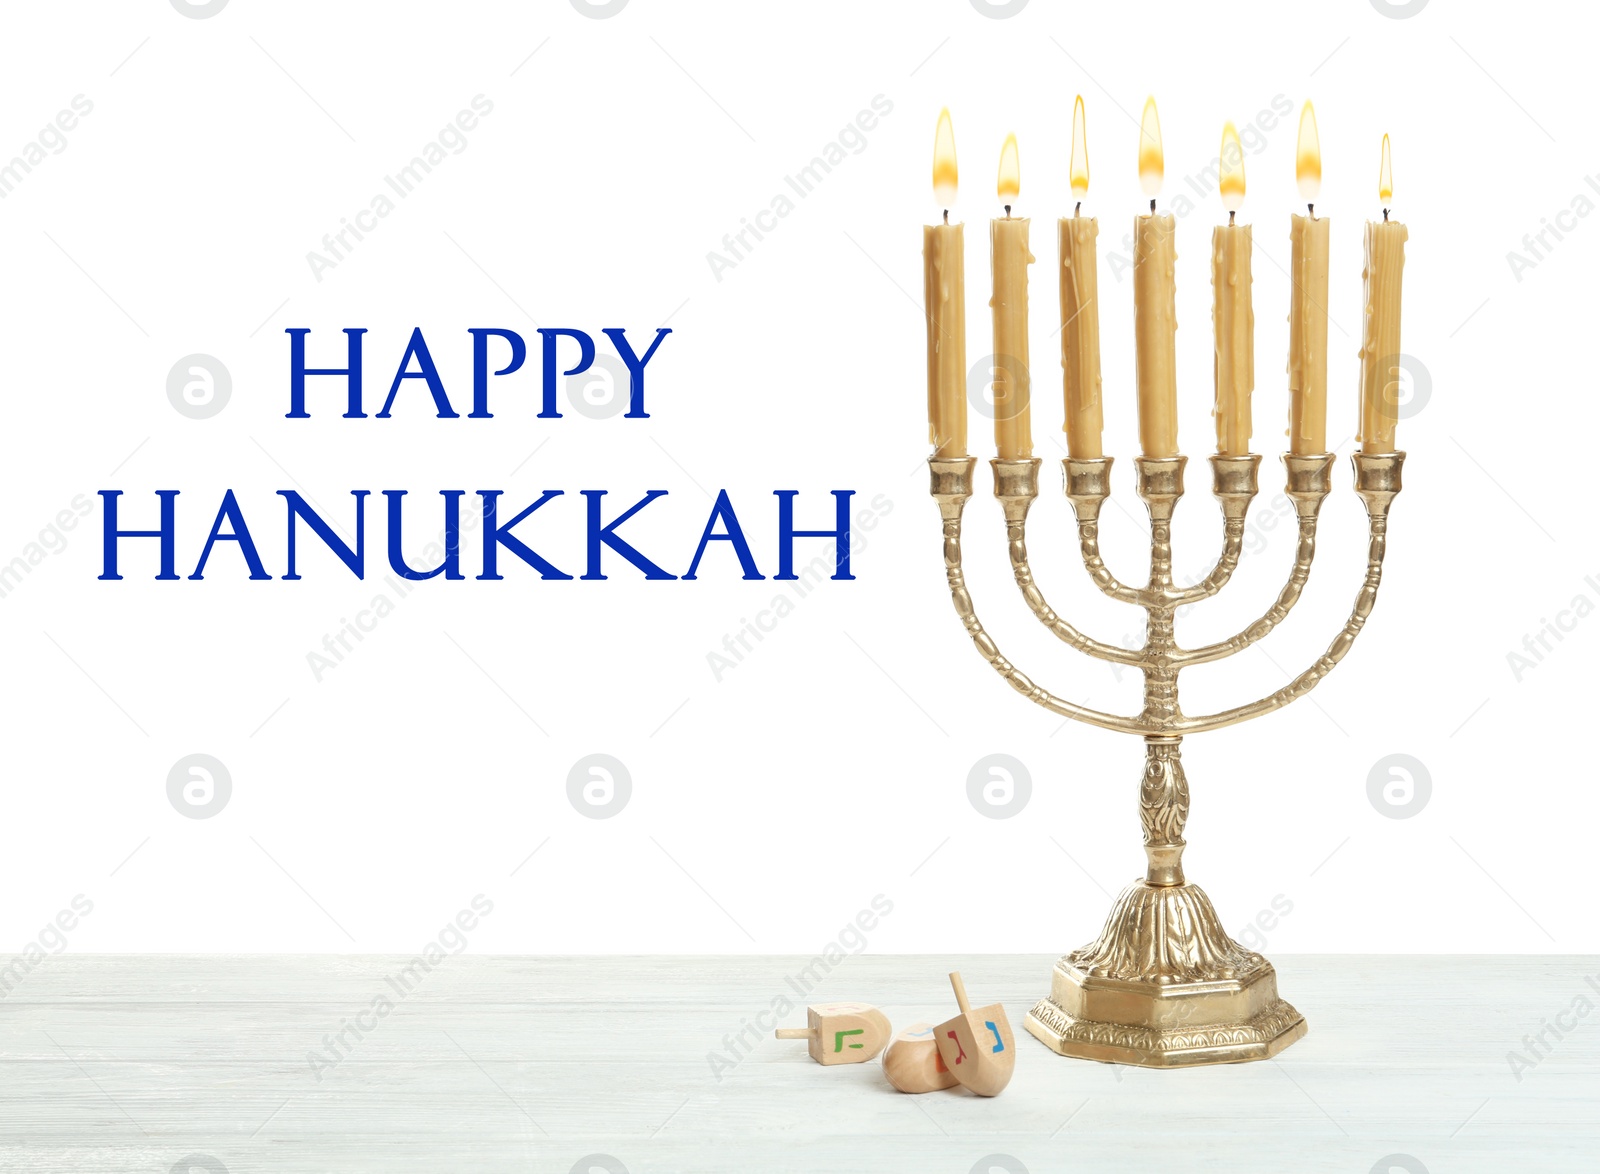 Image of Happy Hanukkah. Traditional menorah and dreidels on wooden table